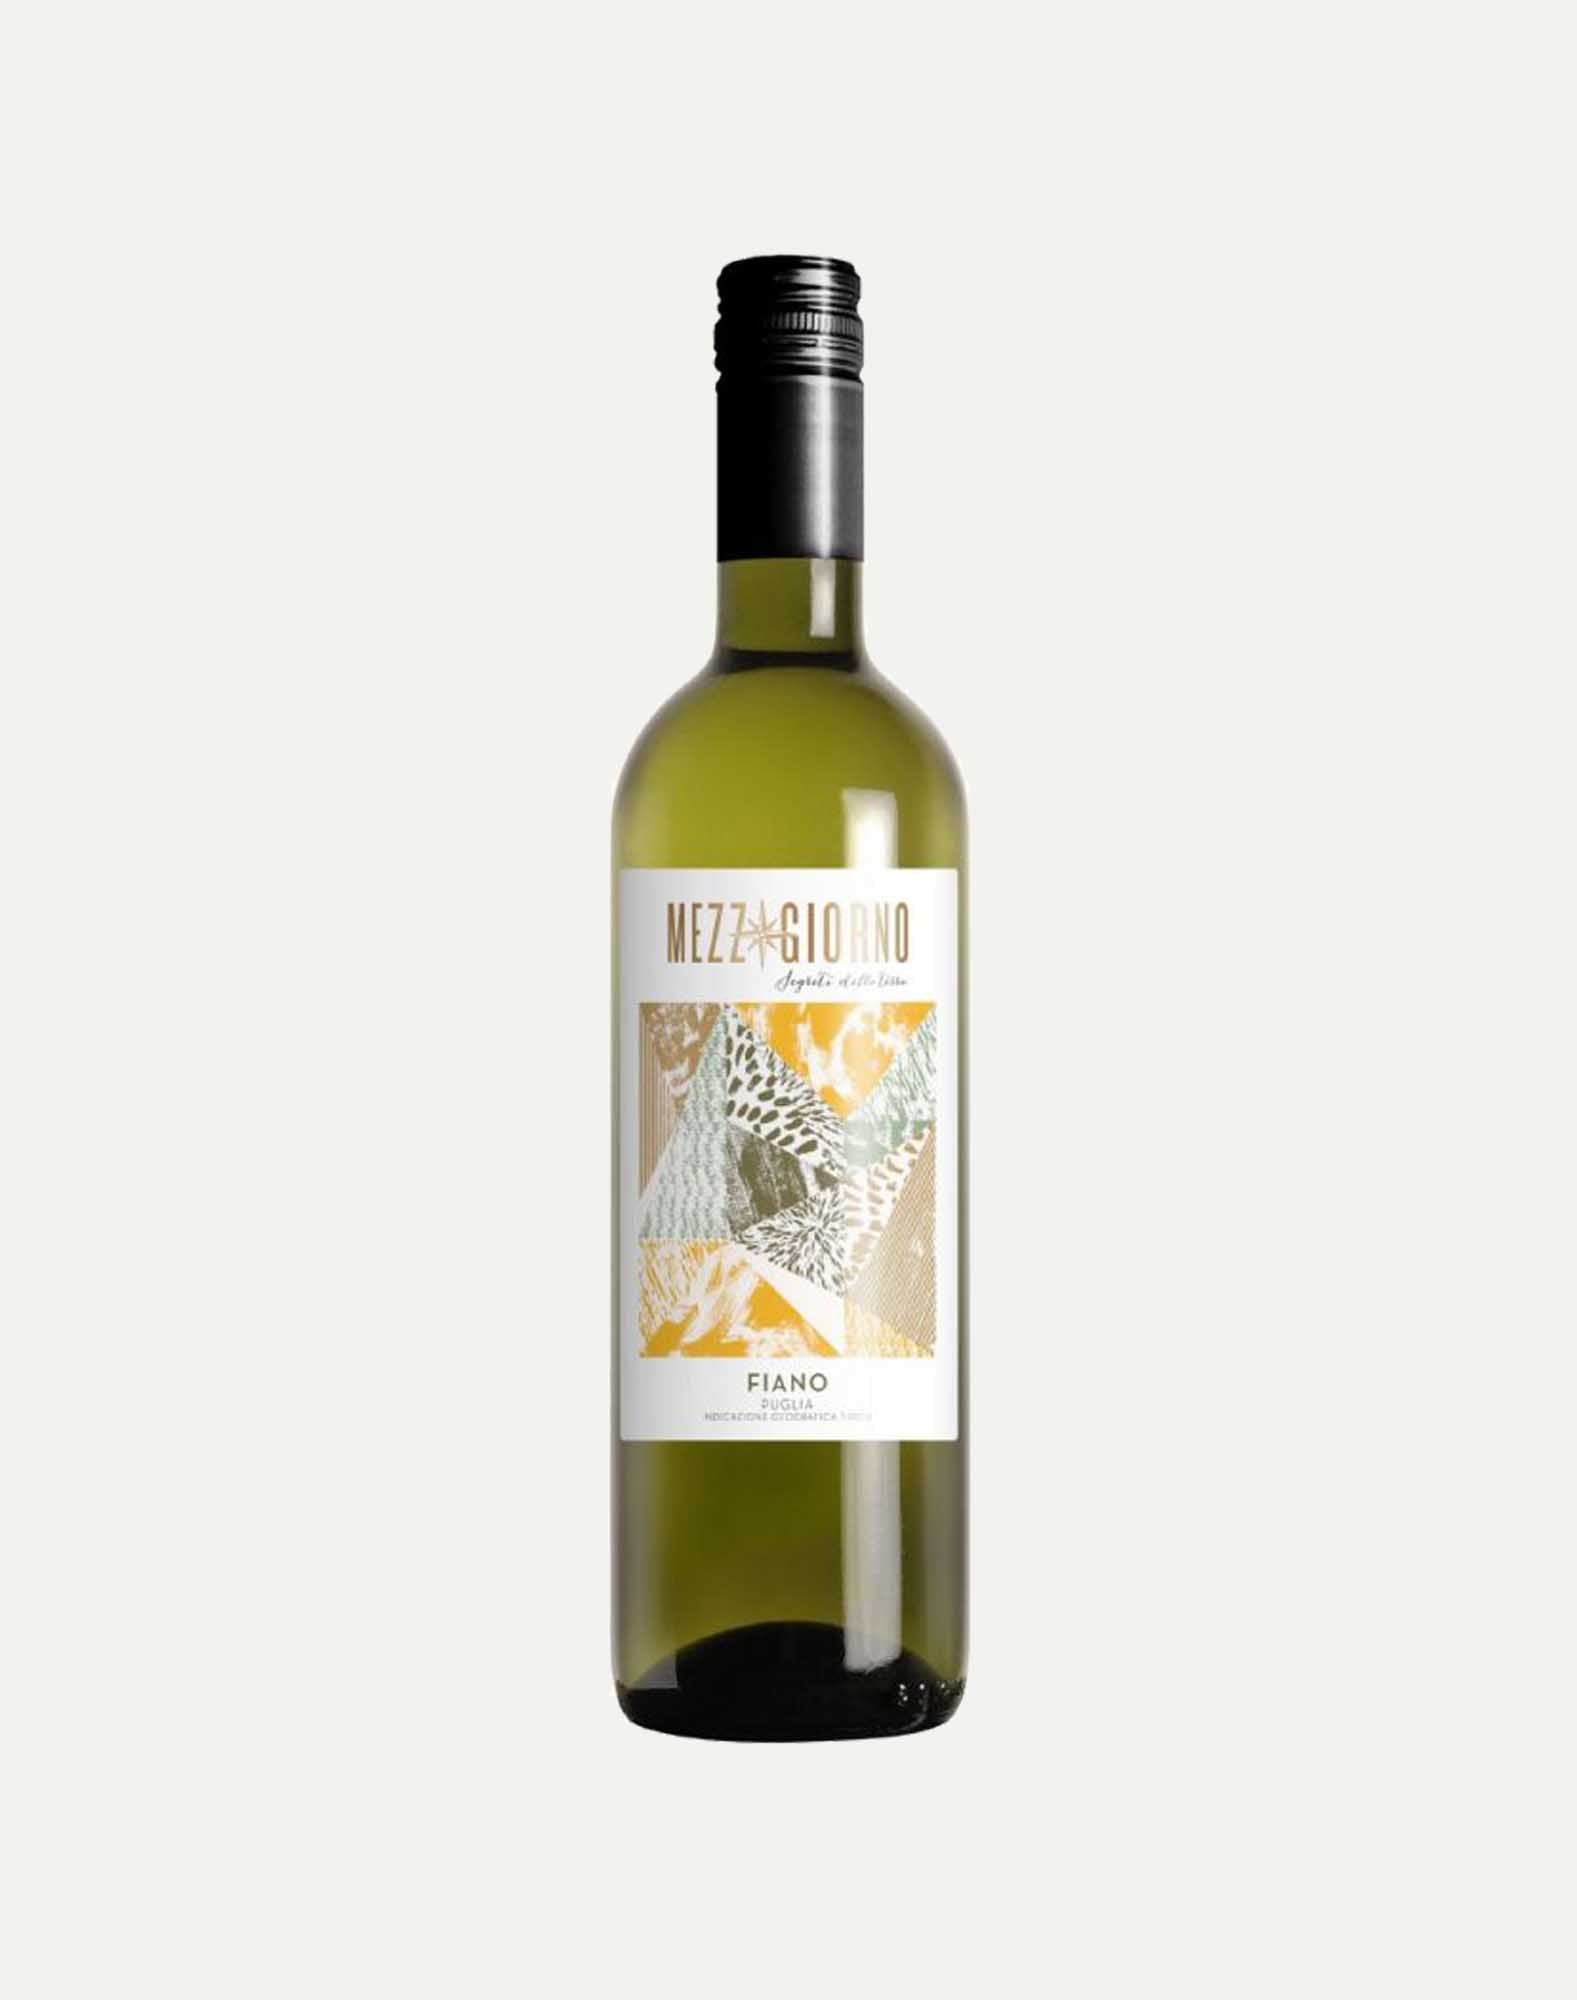 6 bottles of Mezzogiorno Fiano white wine (£6.61 per bottle)